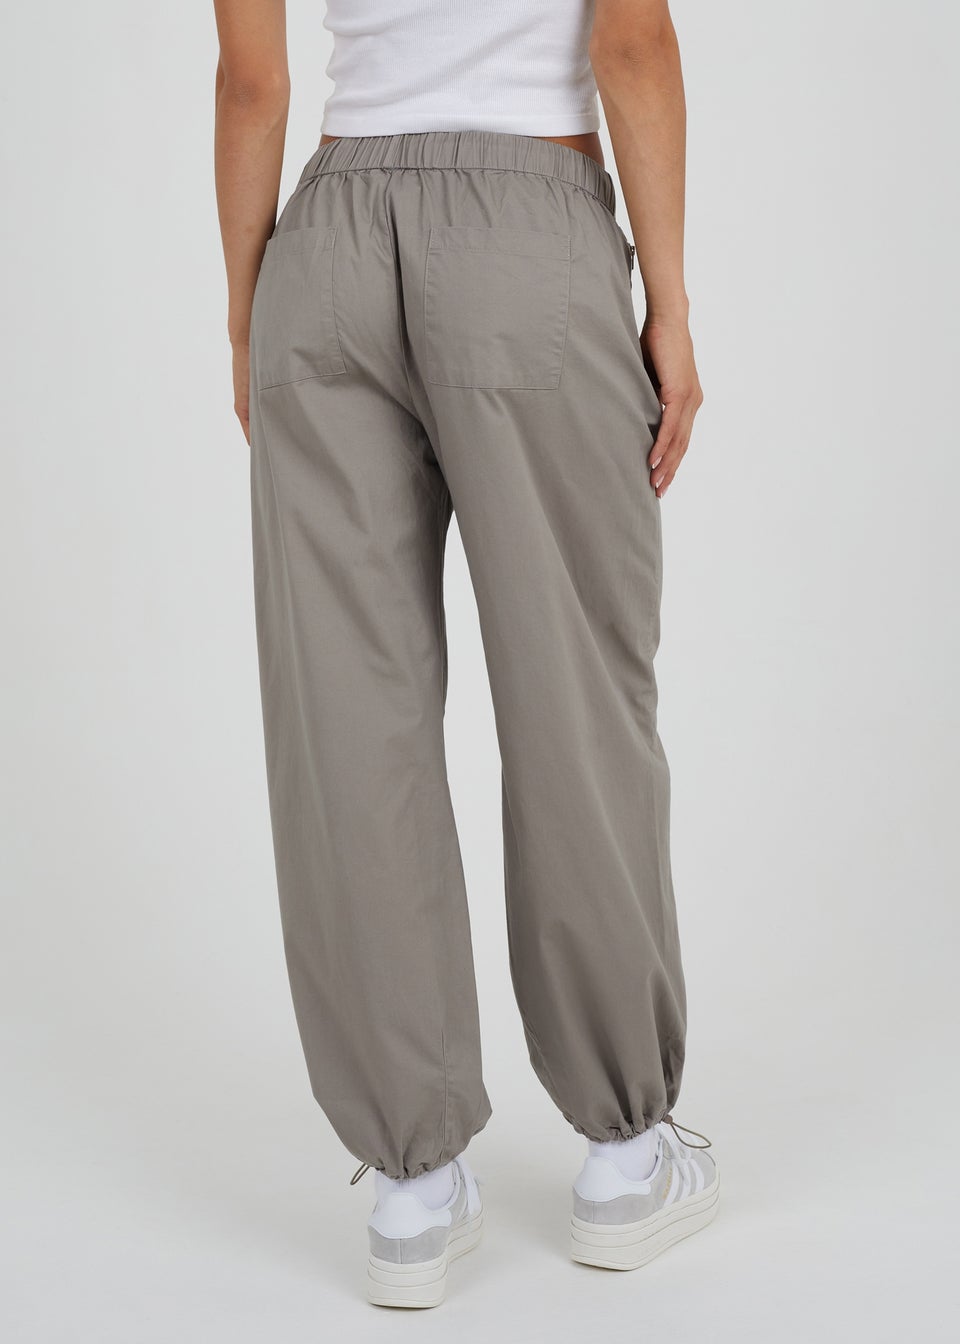 Women's Cinch Hem Woven Cargo Pants - JoyLab Orange M